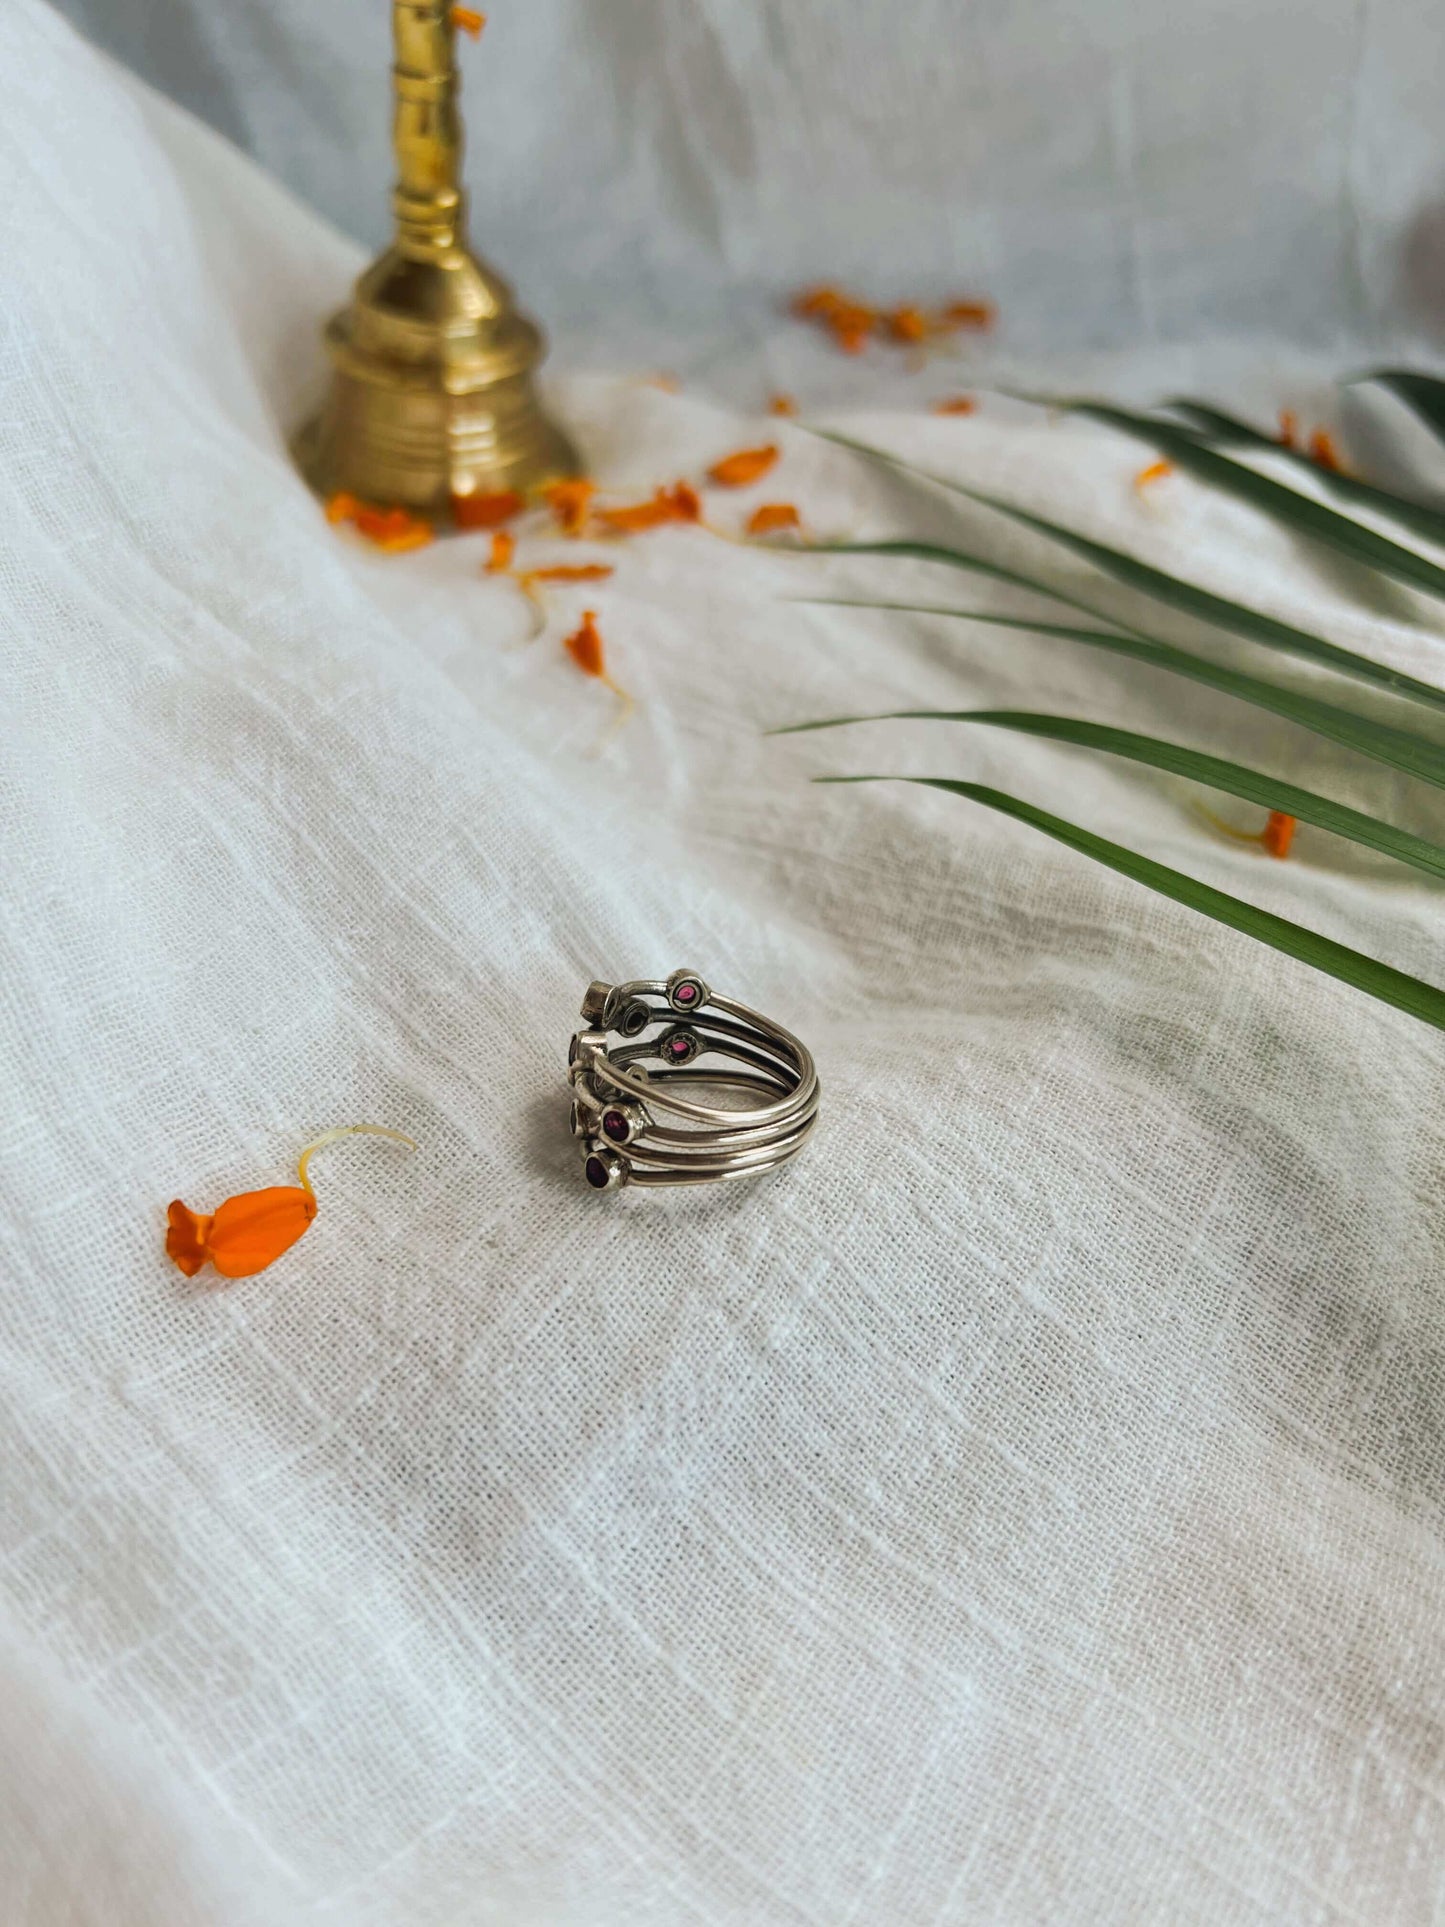 Tara mandal ring with ruby glass stones